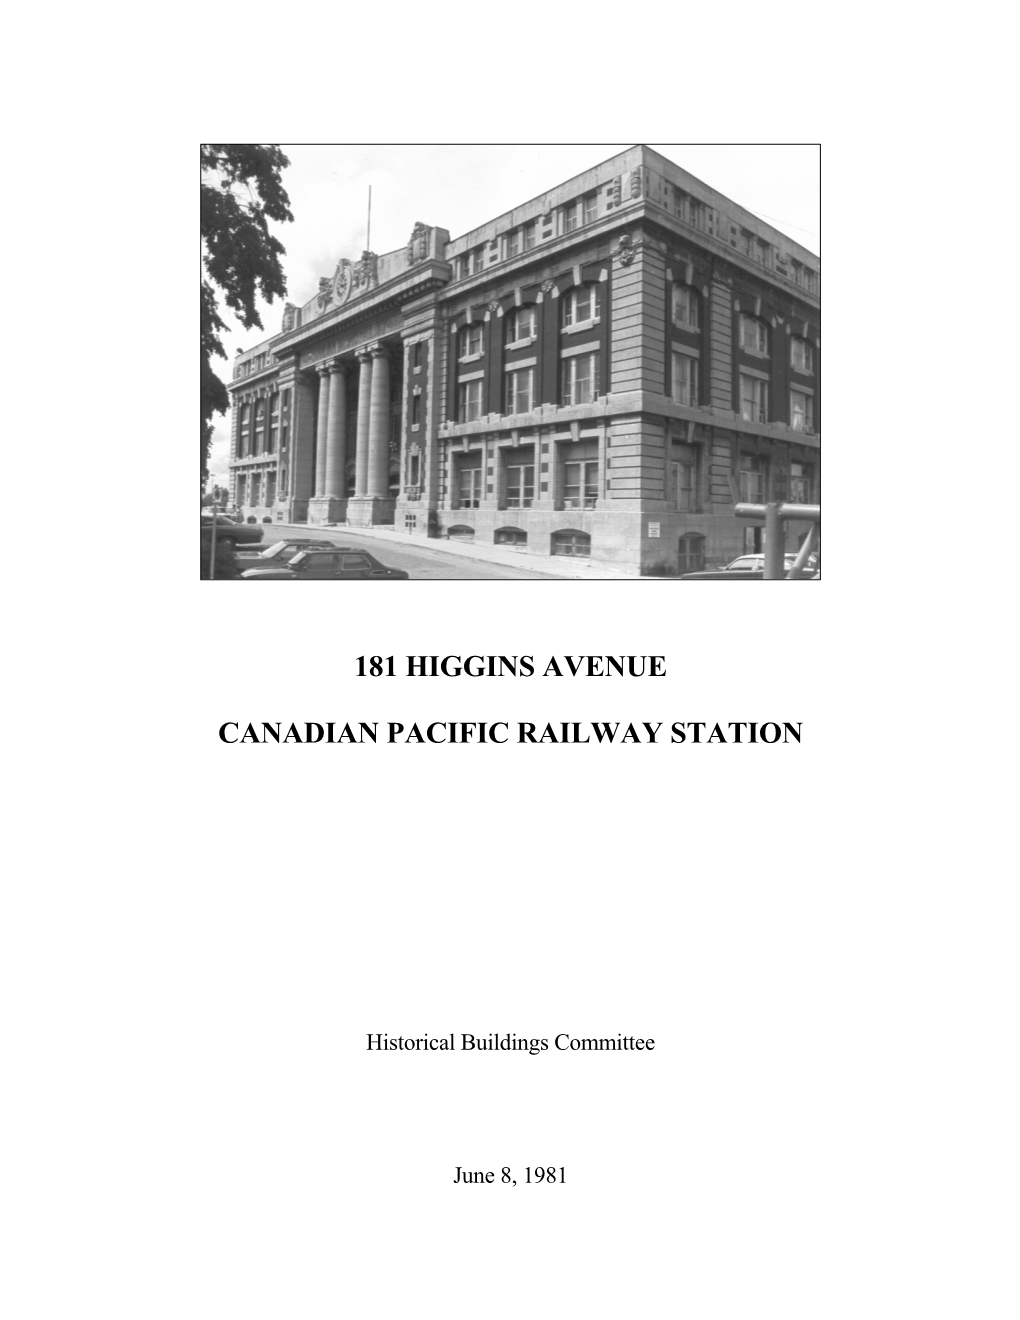 181 Higgins Avenue Canadian Pacific Railway Station